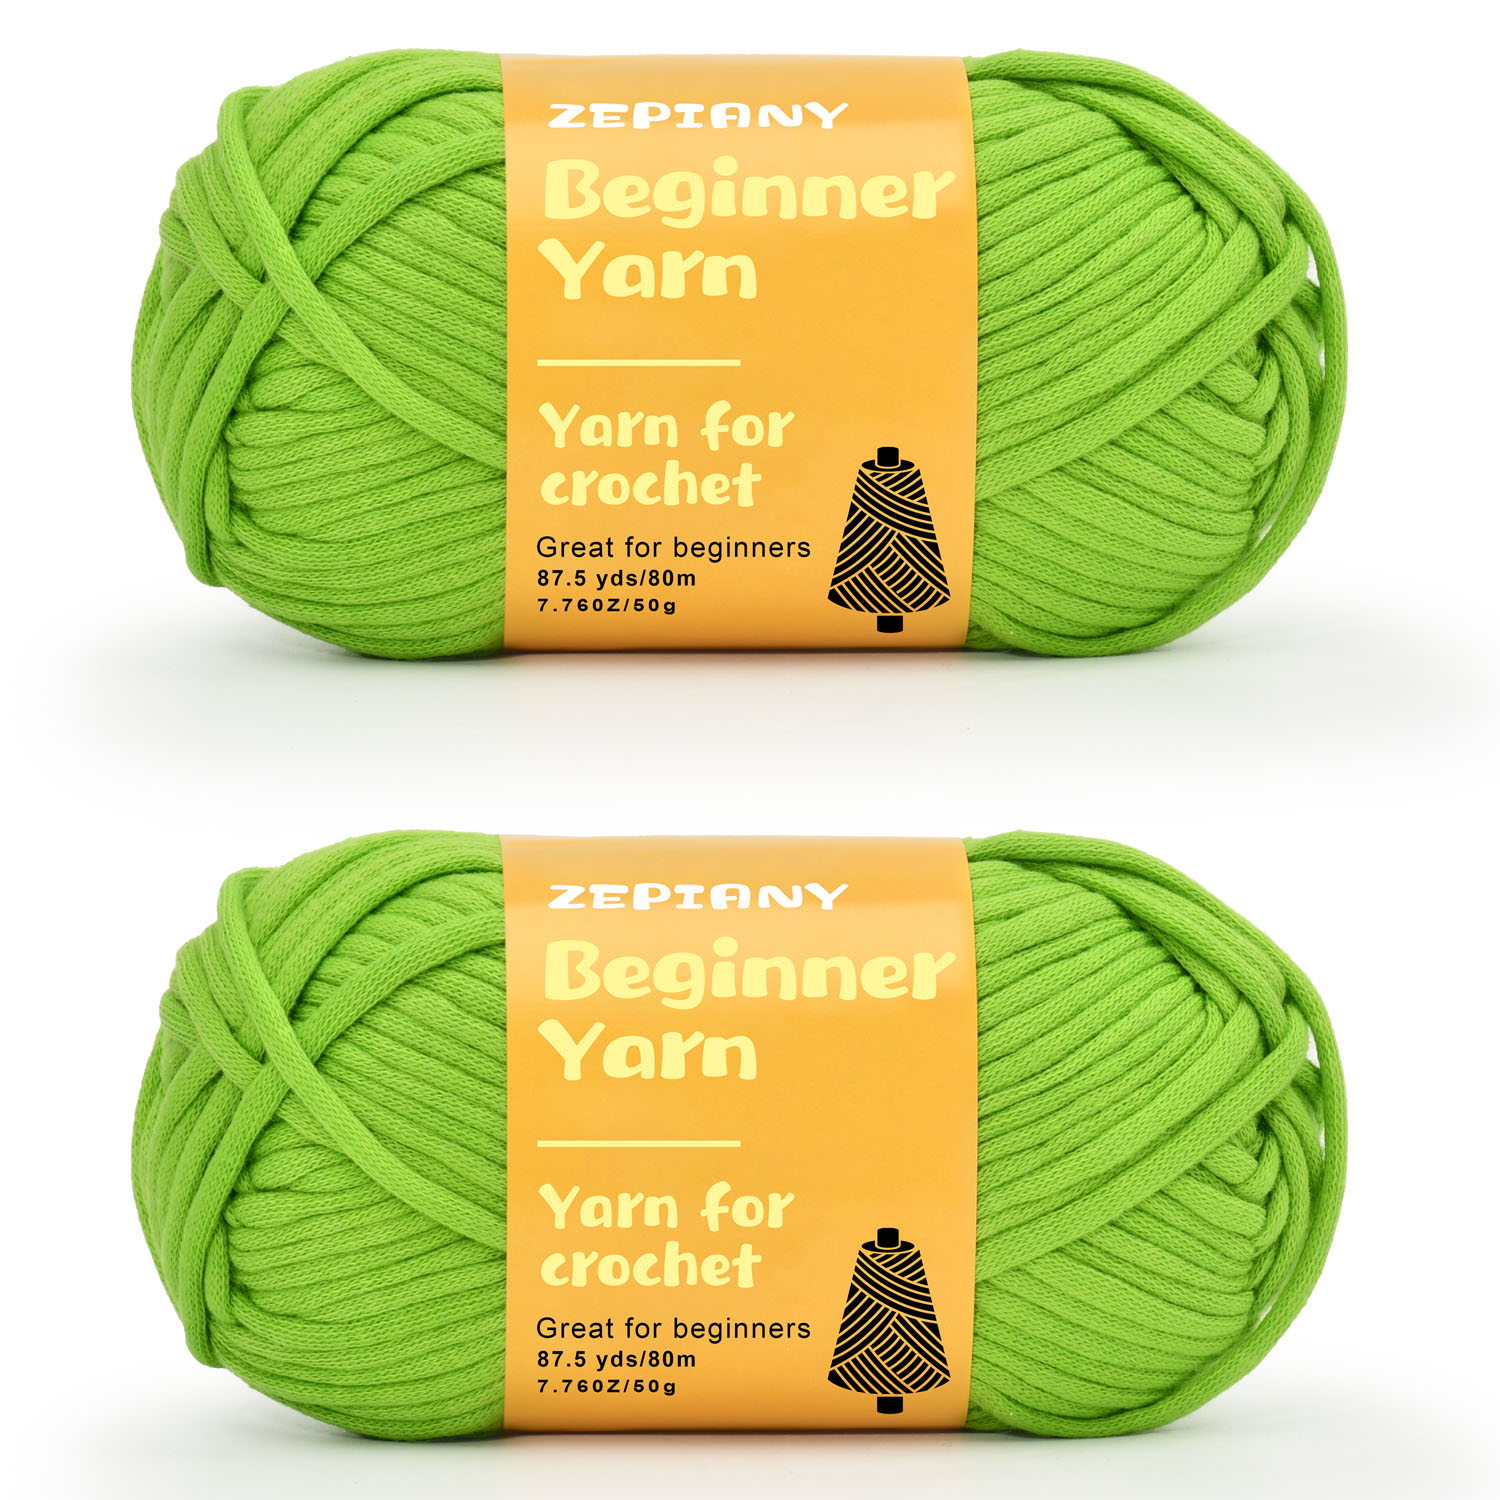  15PCS 750g Beginners Yarn for Crocheting and Knitting,1300  Yards Cotton Nylon Blend Yarn for Hand DIY Bag Basket Dolls and Cushion